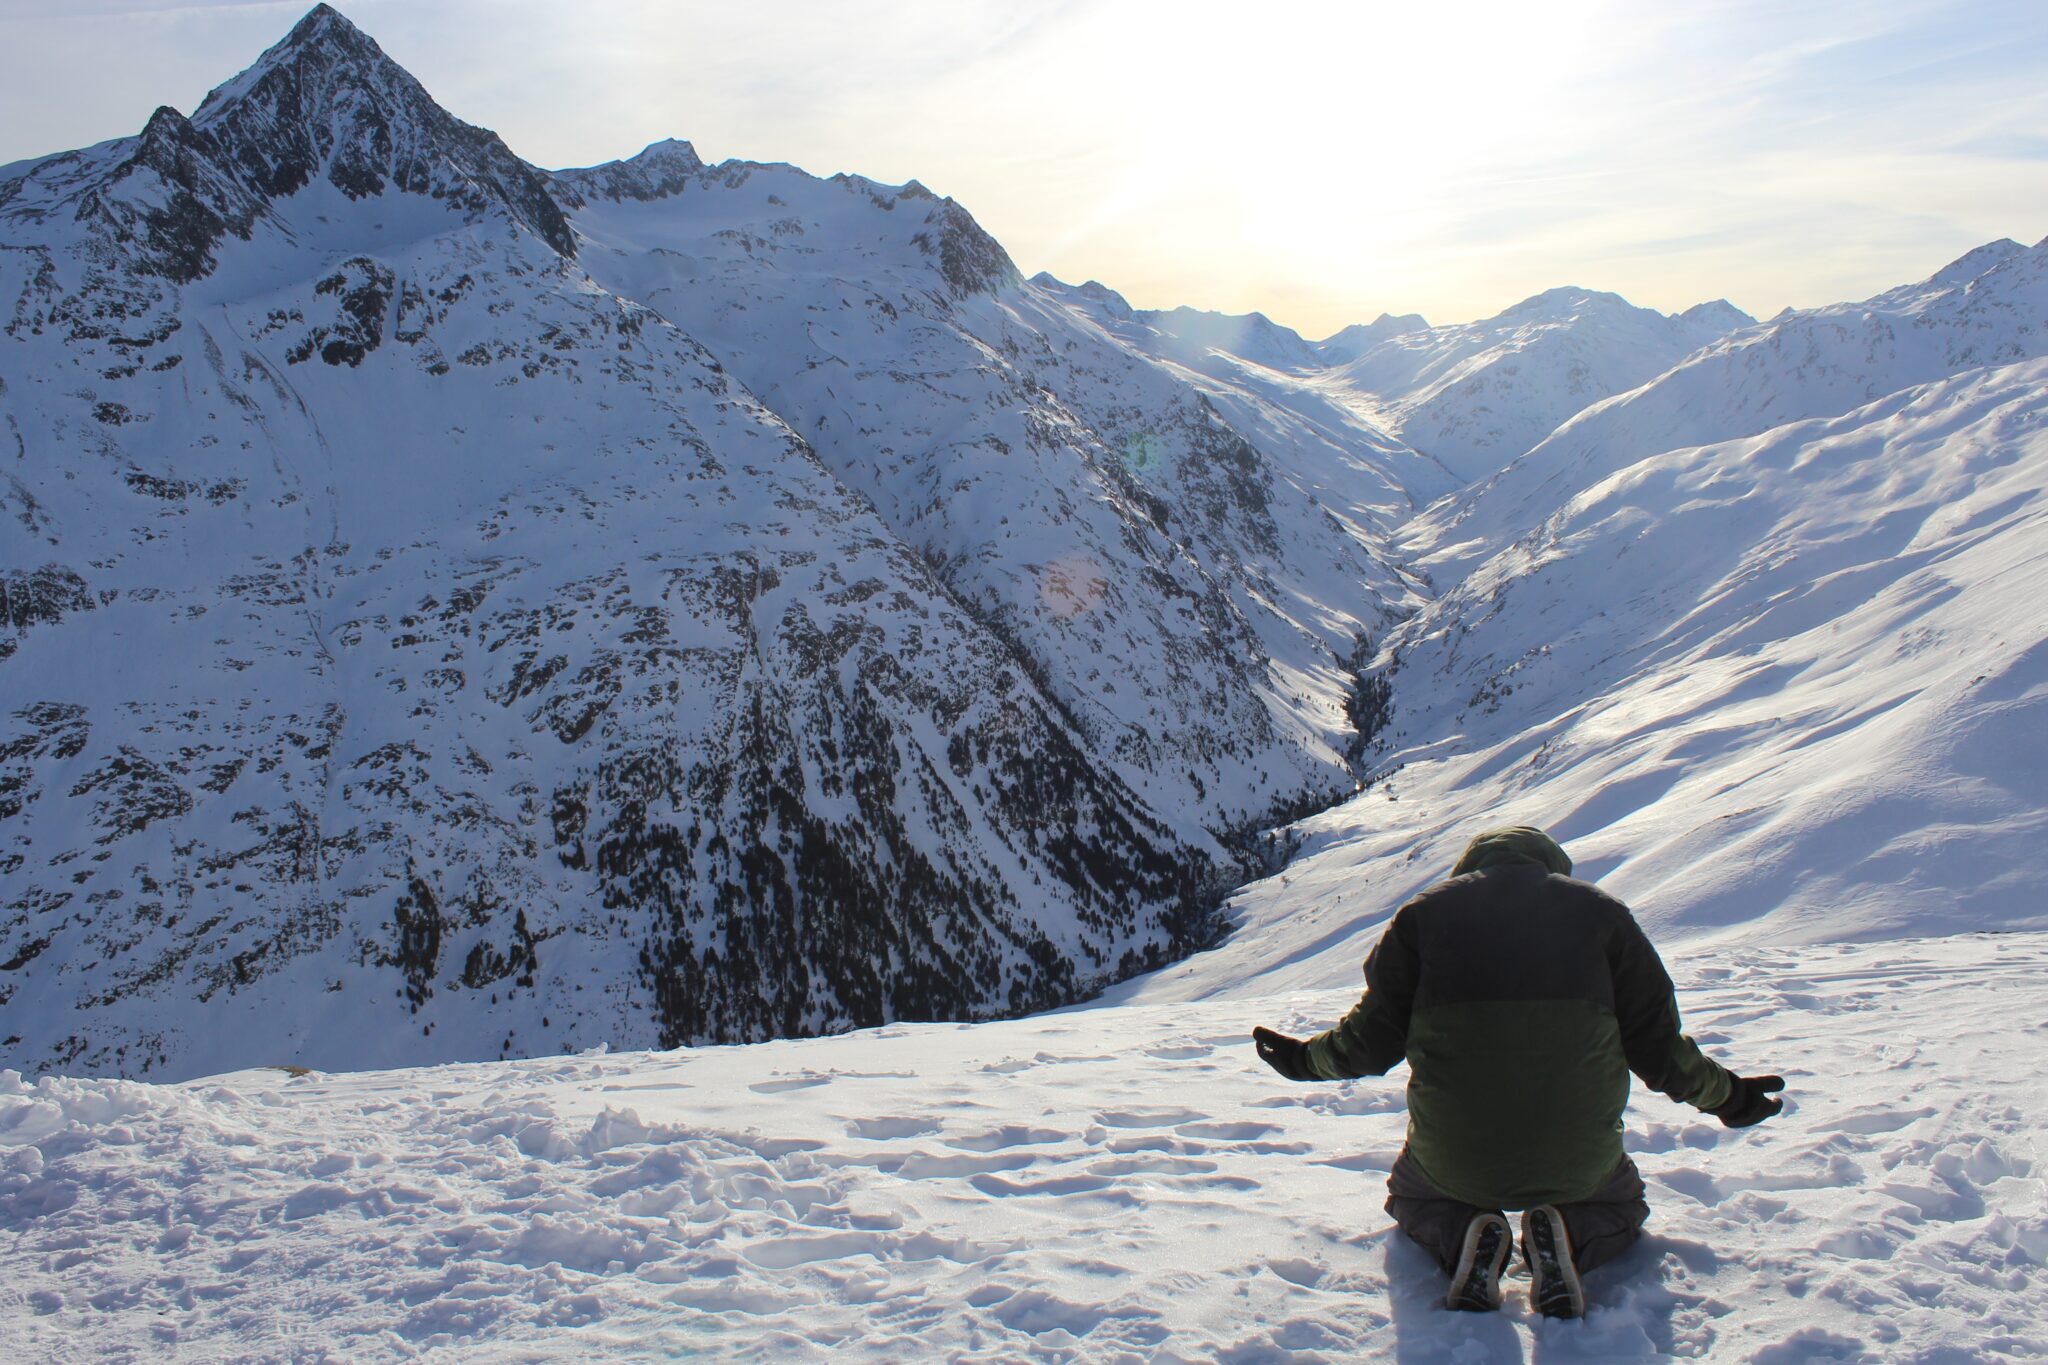 Man praying on top of a snowy mountain